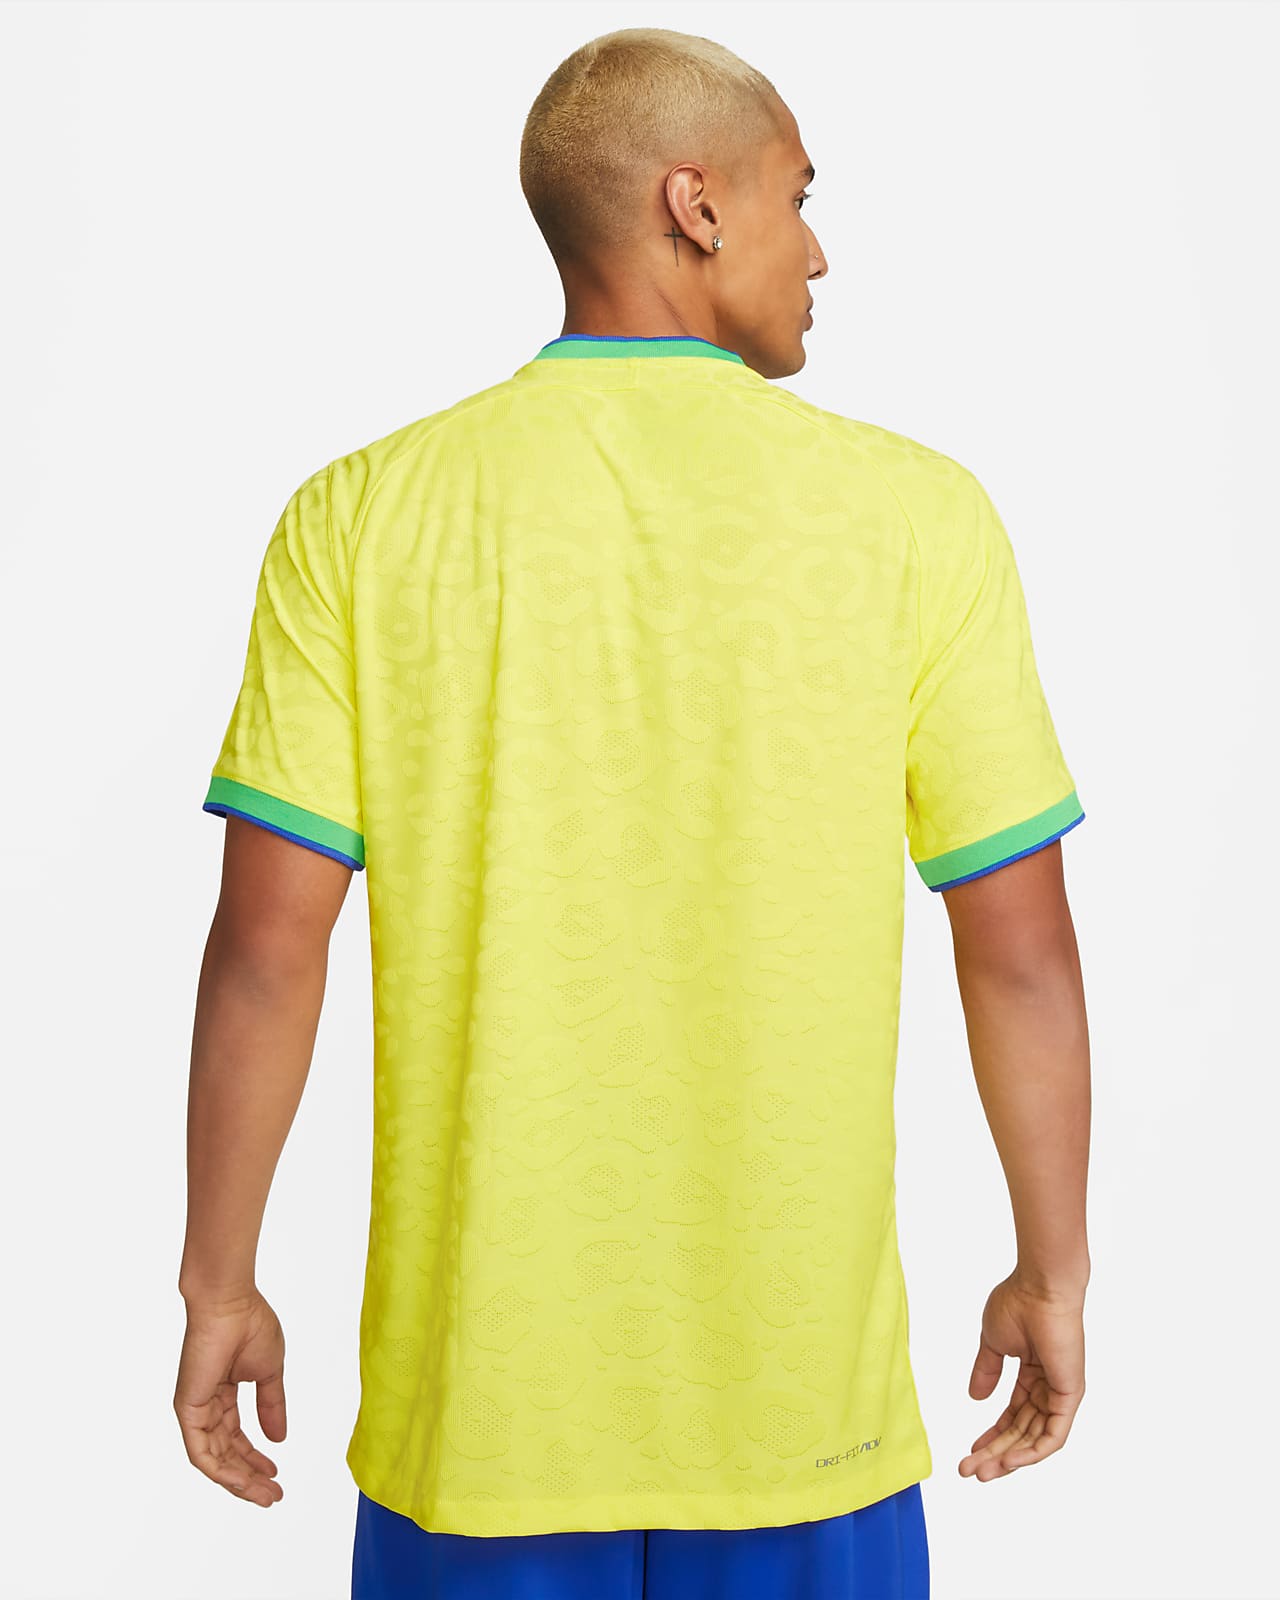 Brazil Soccer Jersey Men's T-Shirt